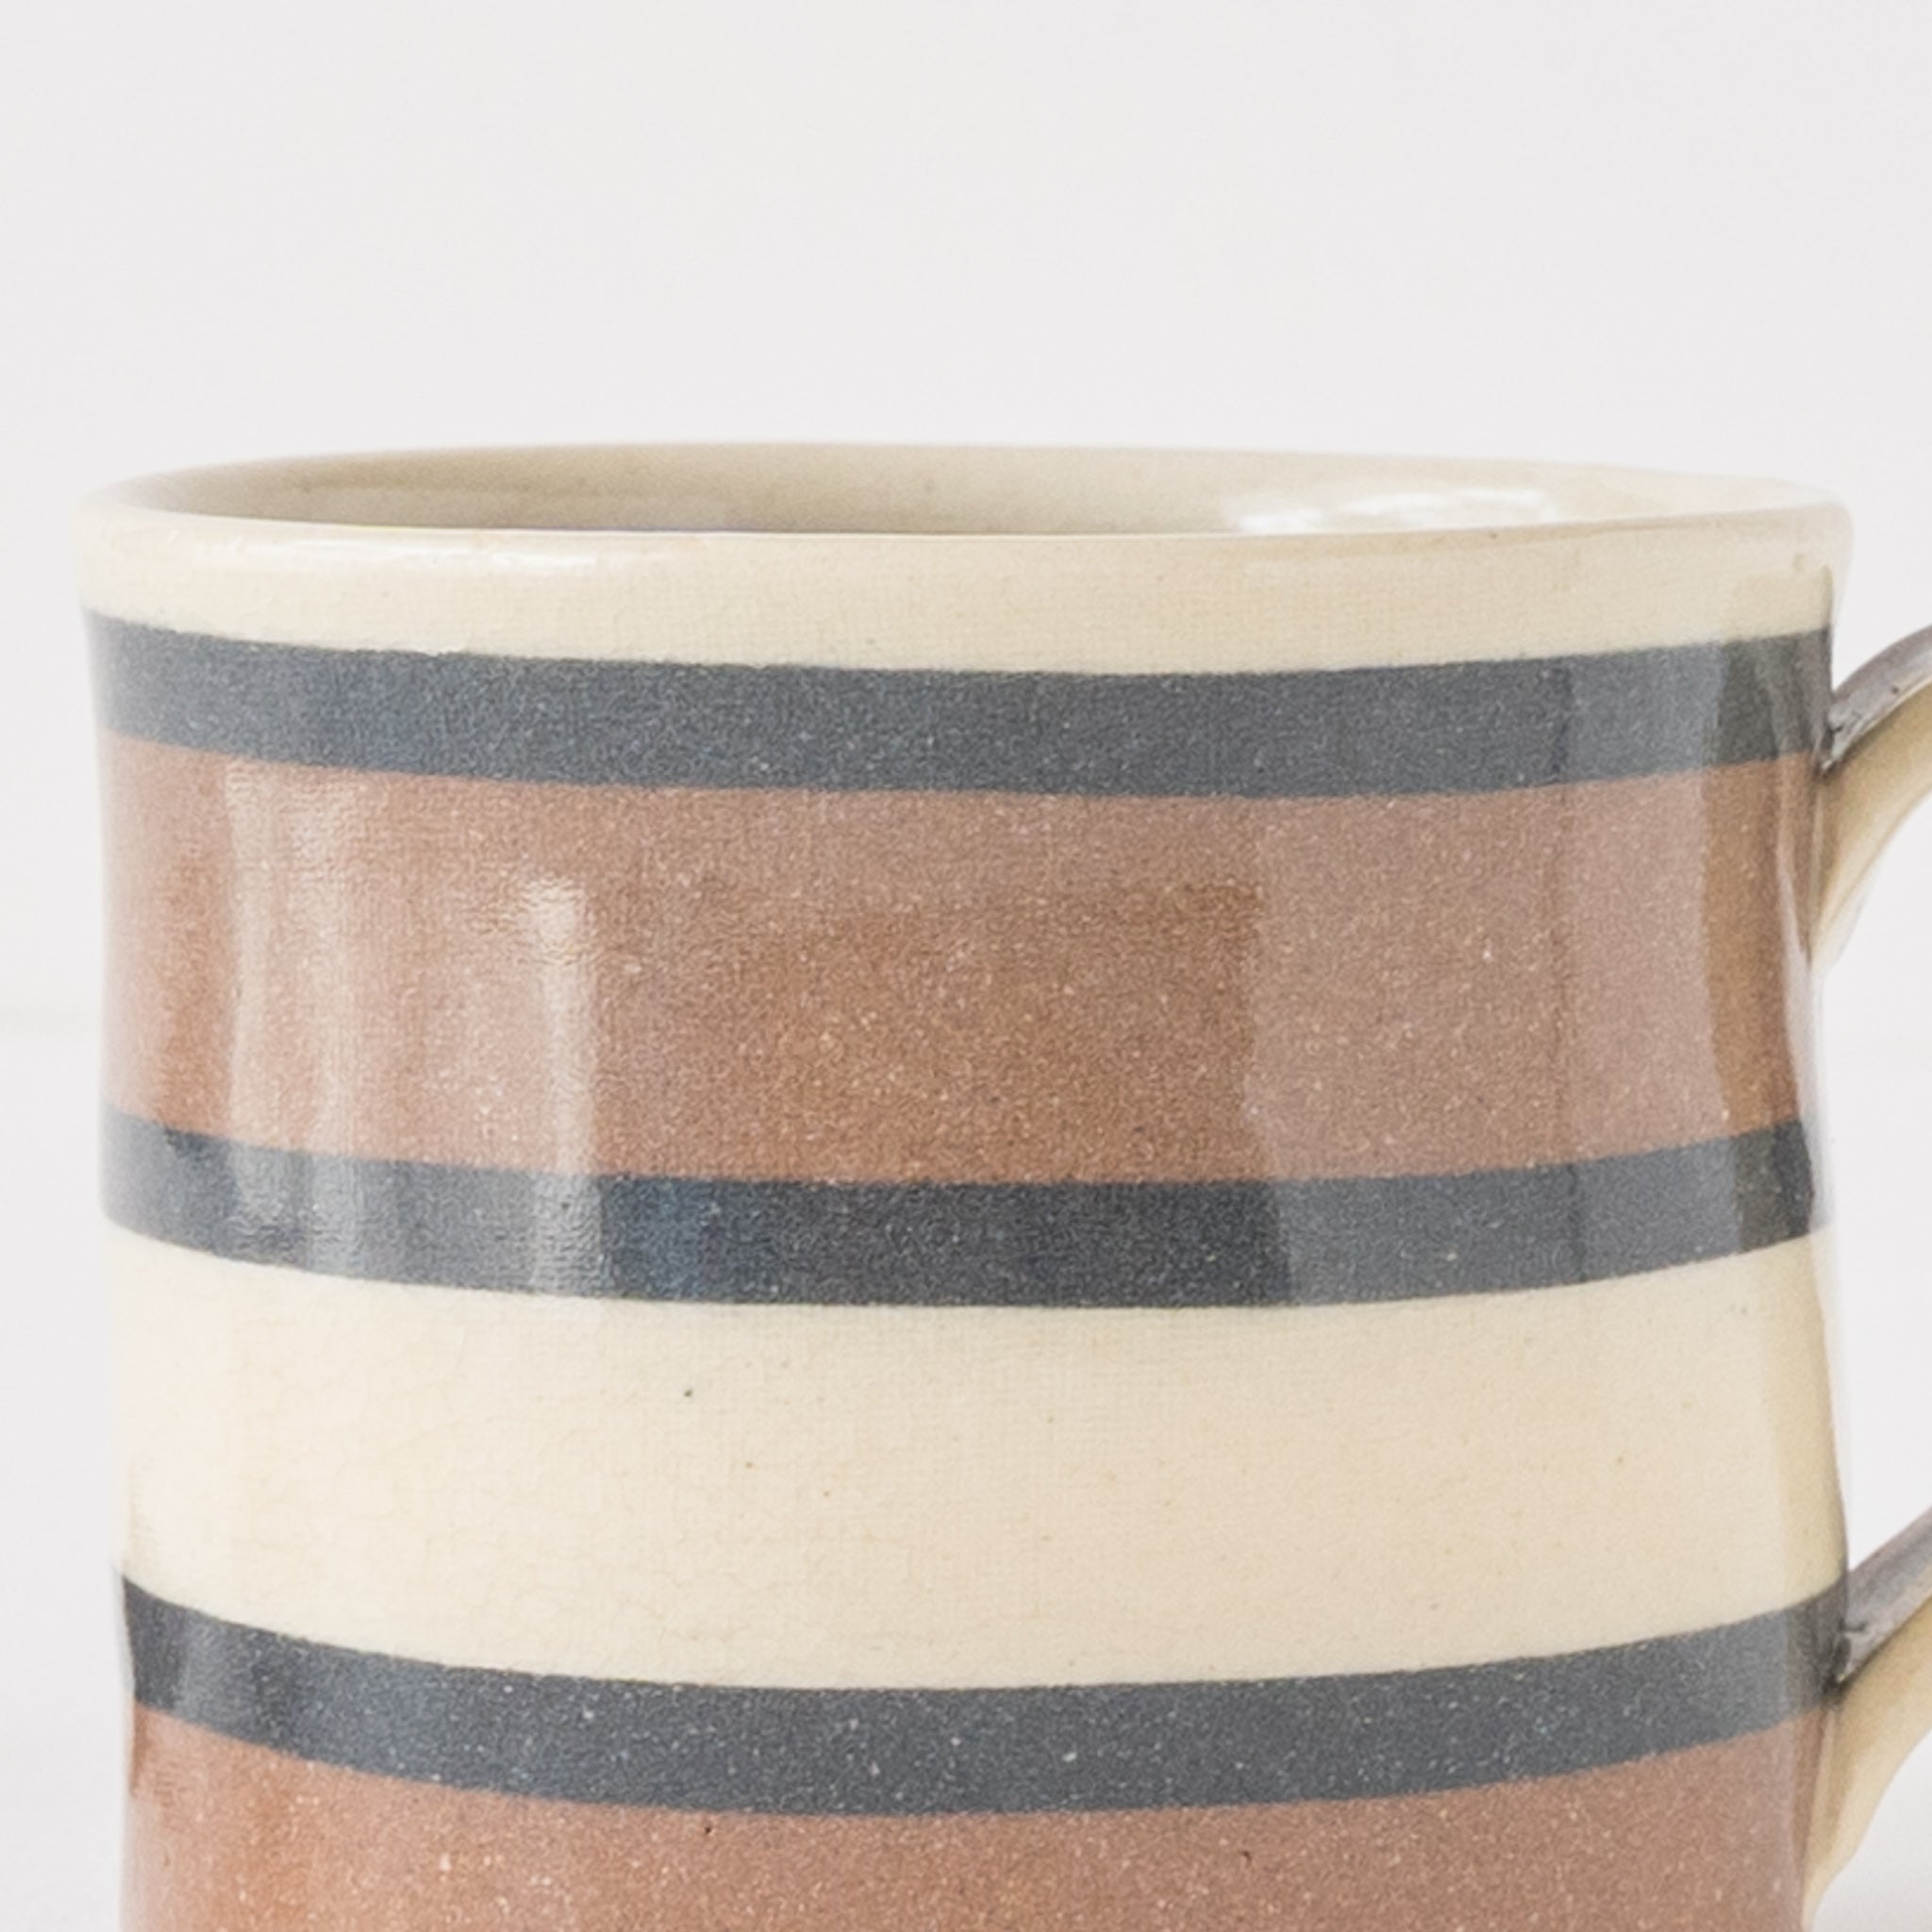 Hanako Sakashita's mug with a cute striped pattern